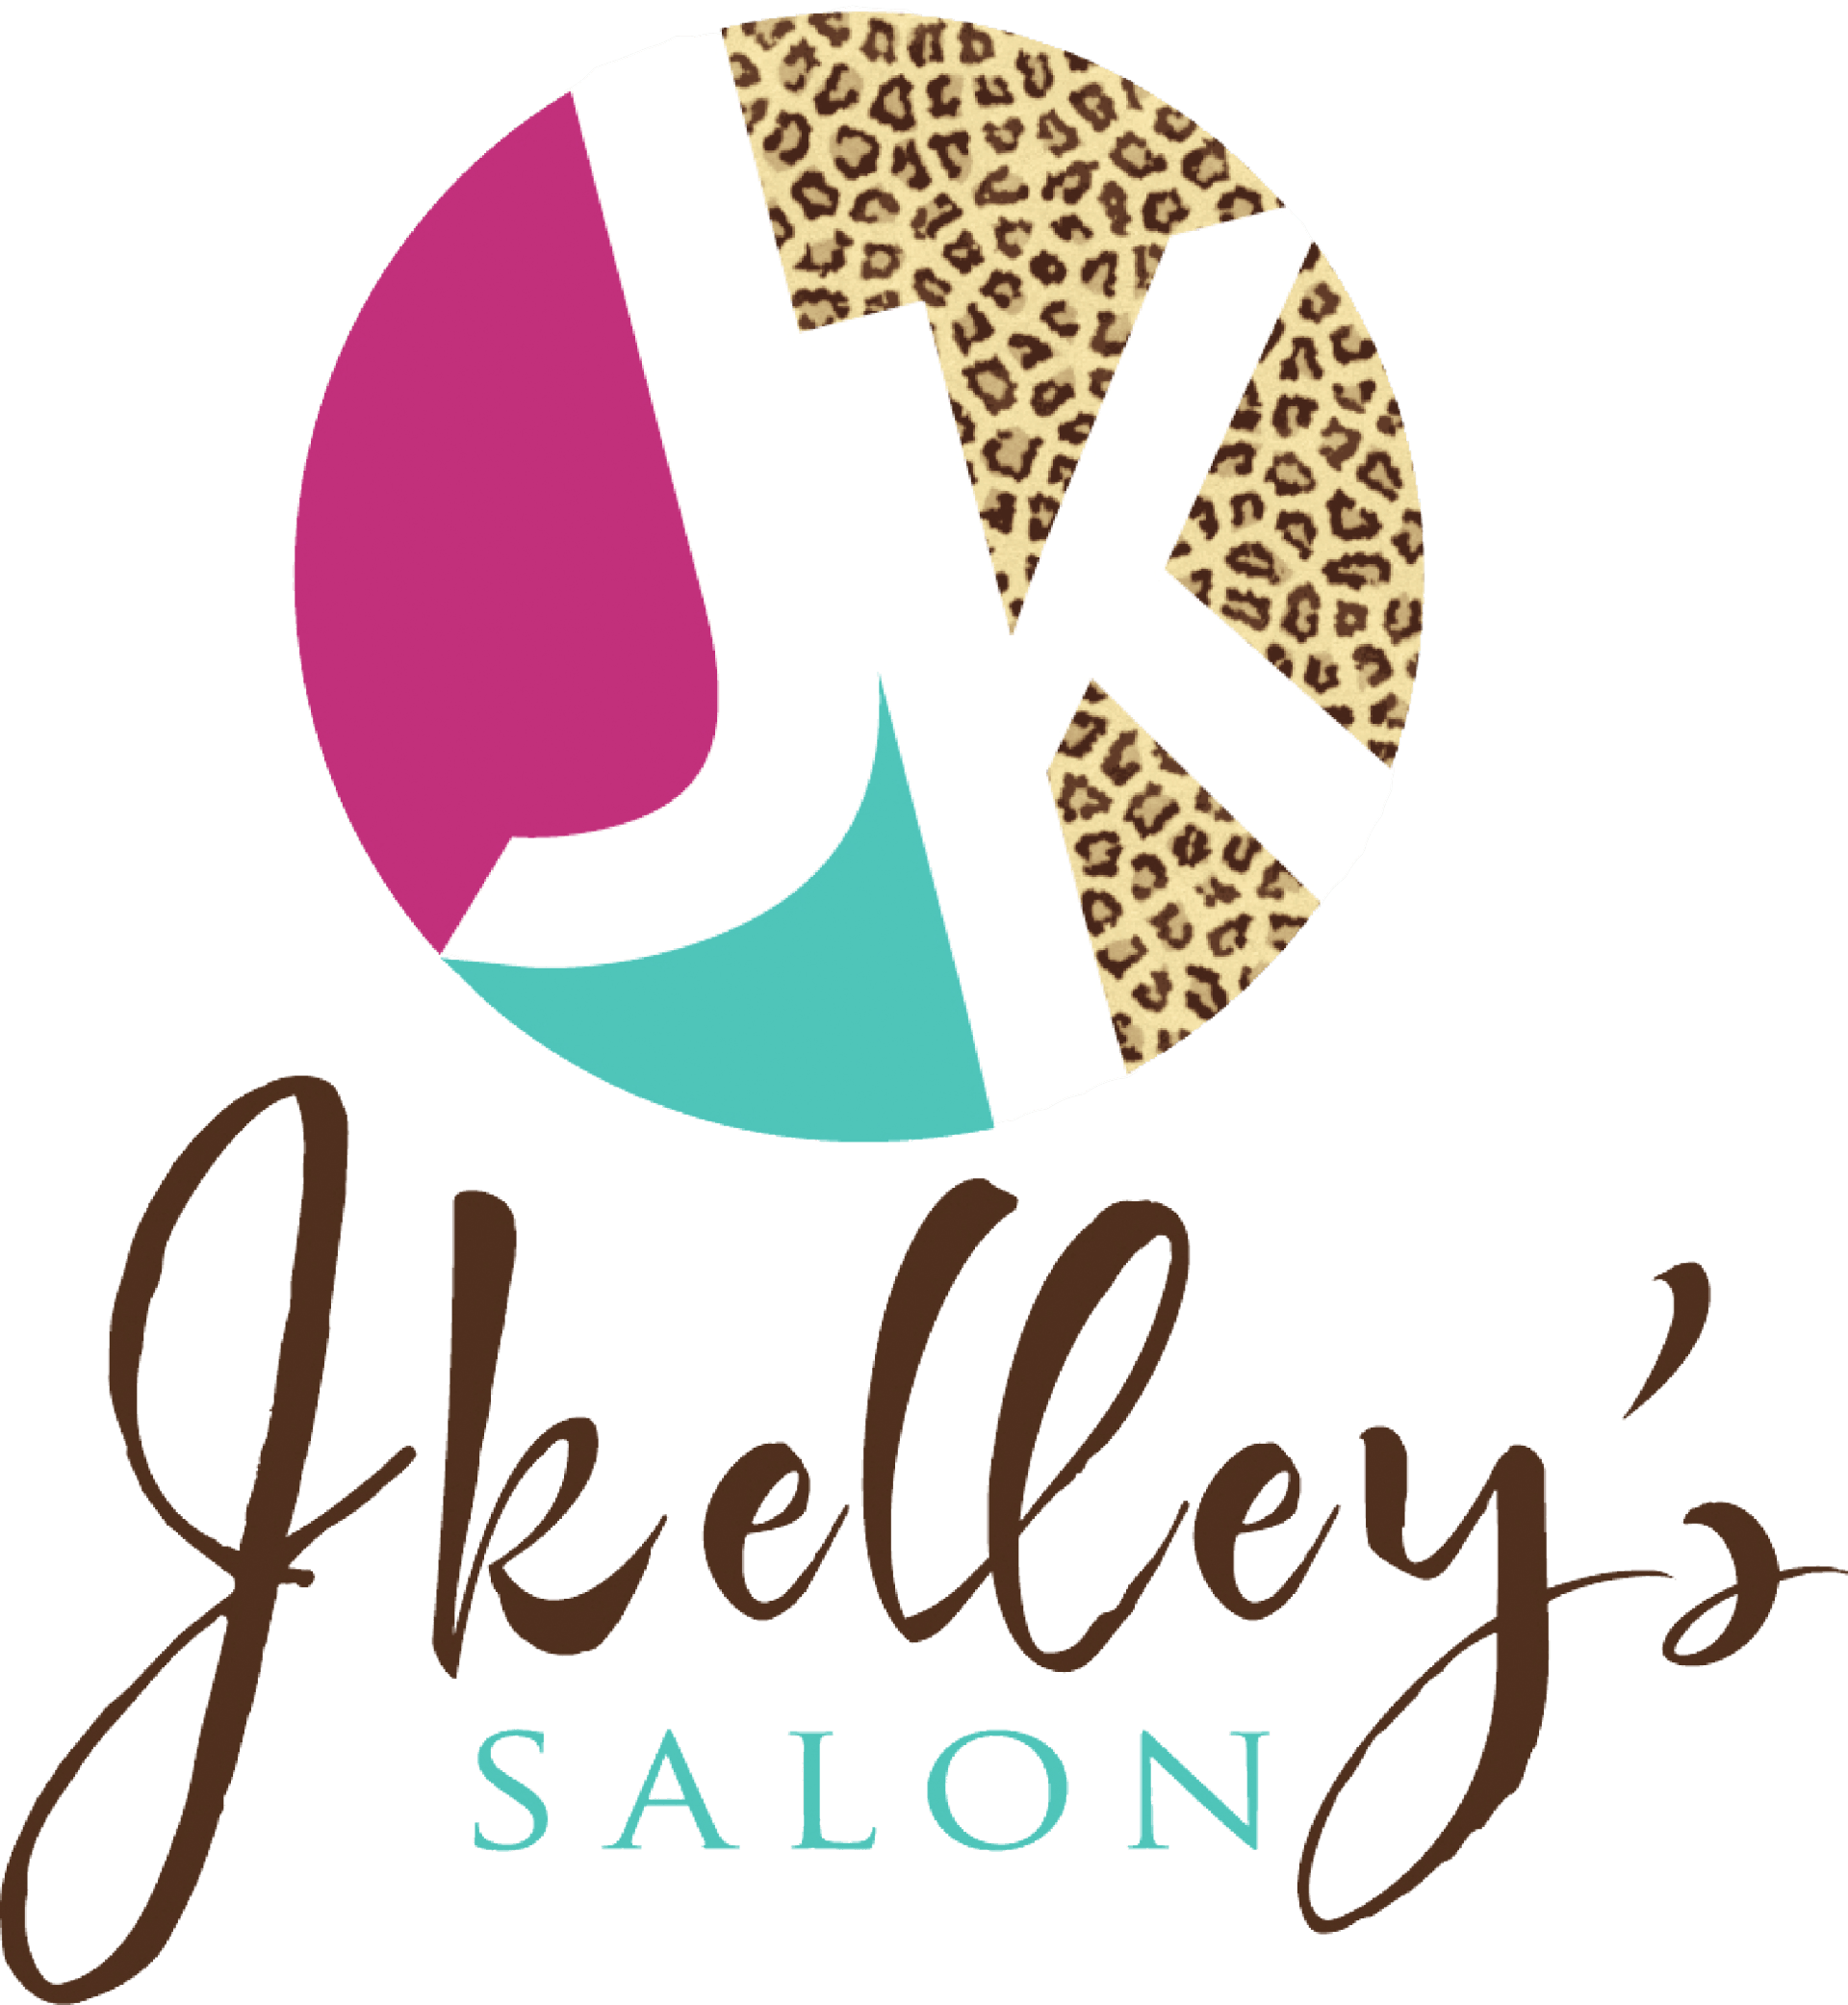 J Kelley's Salon